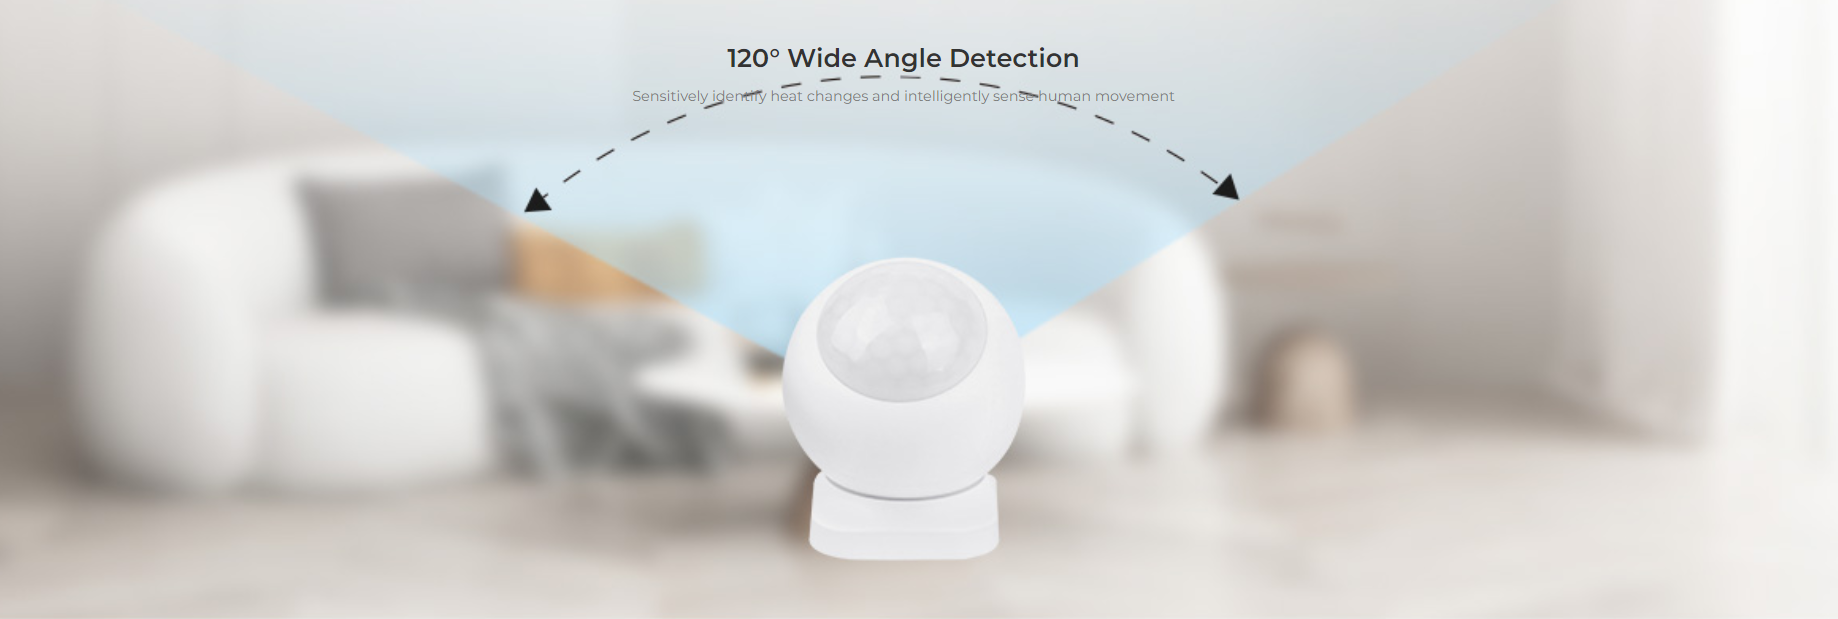 120° Wide Angle Detection